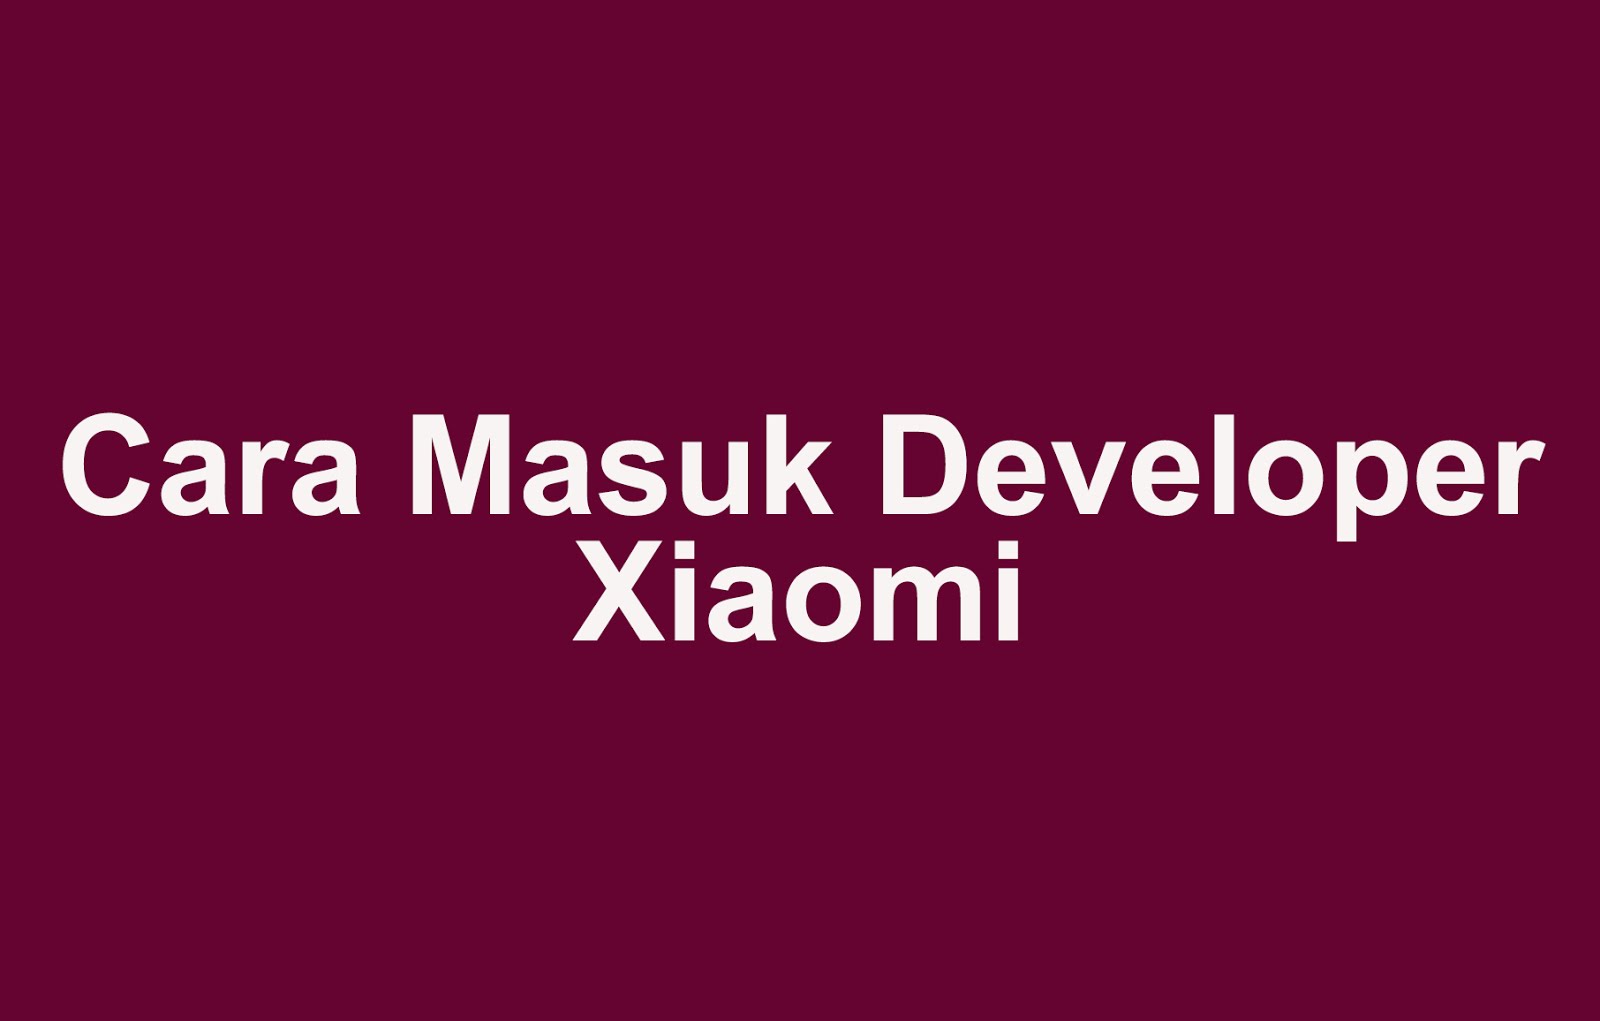 Cara Masuk Developer Xiaomi